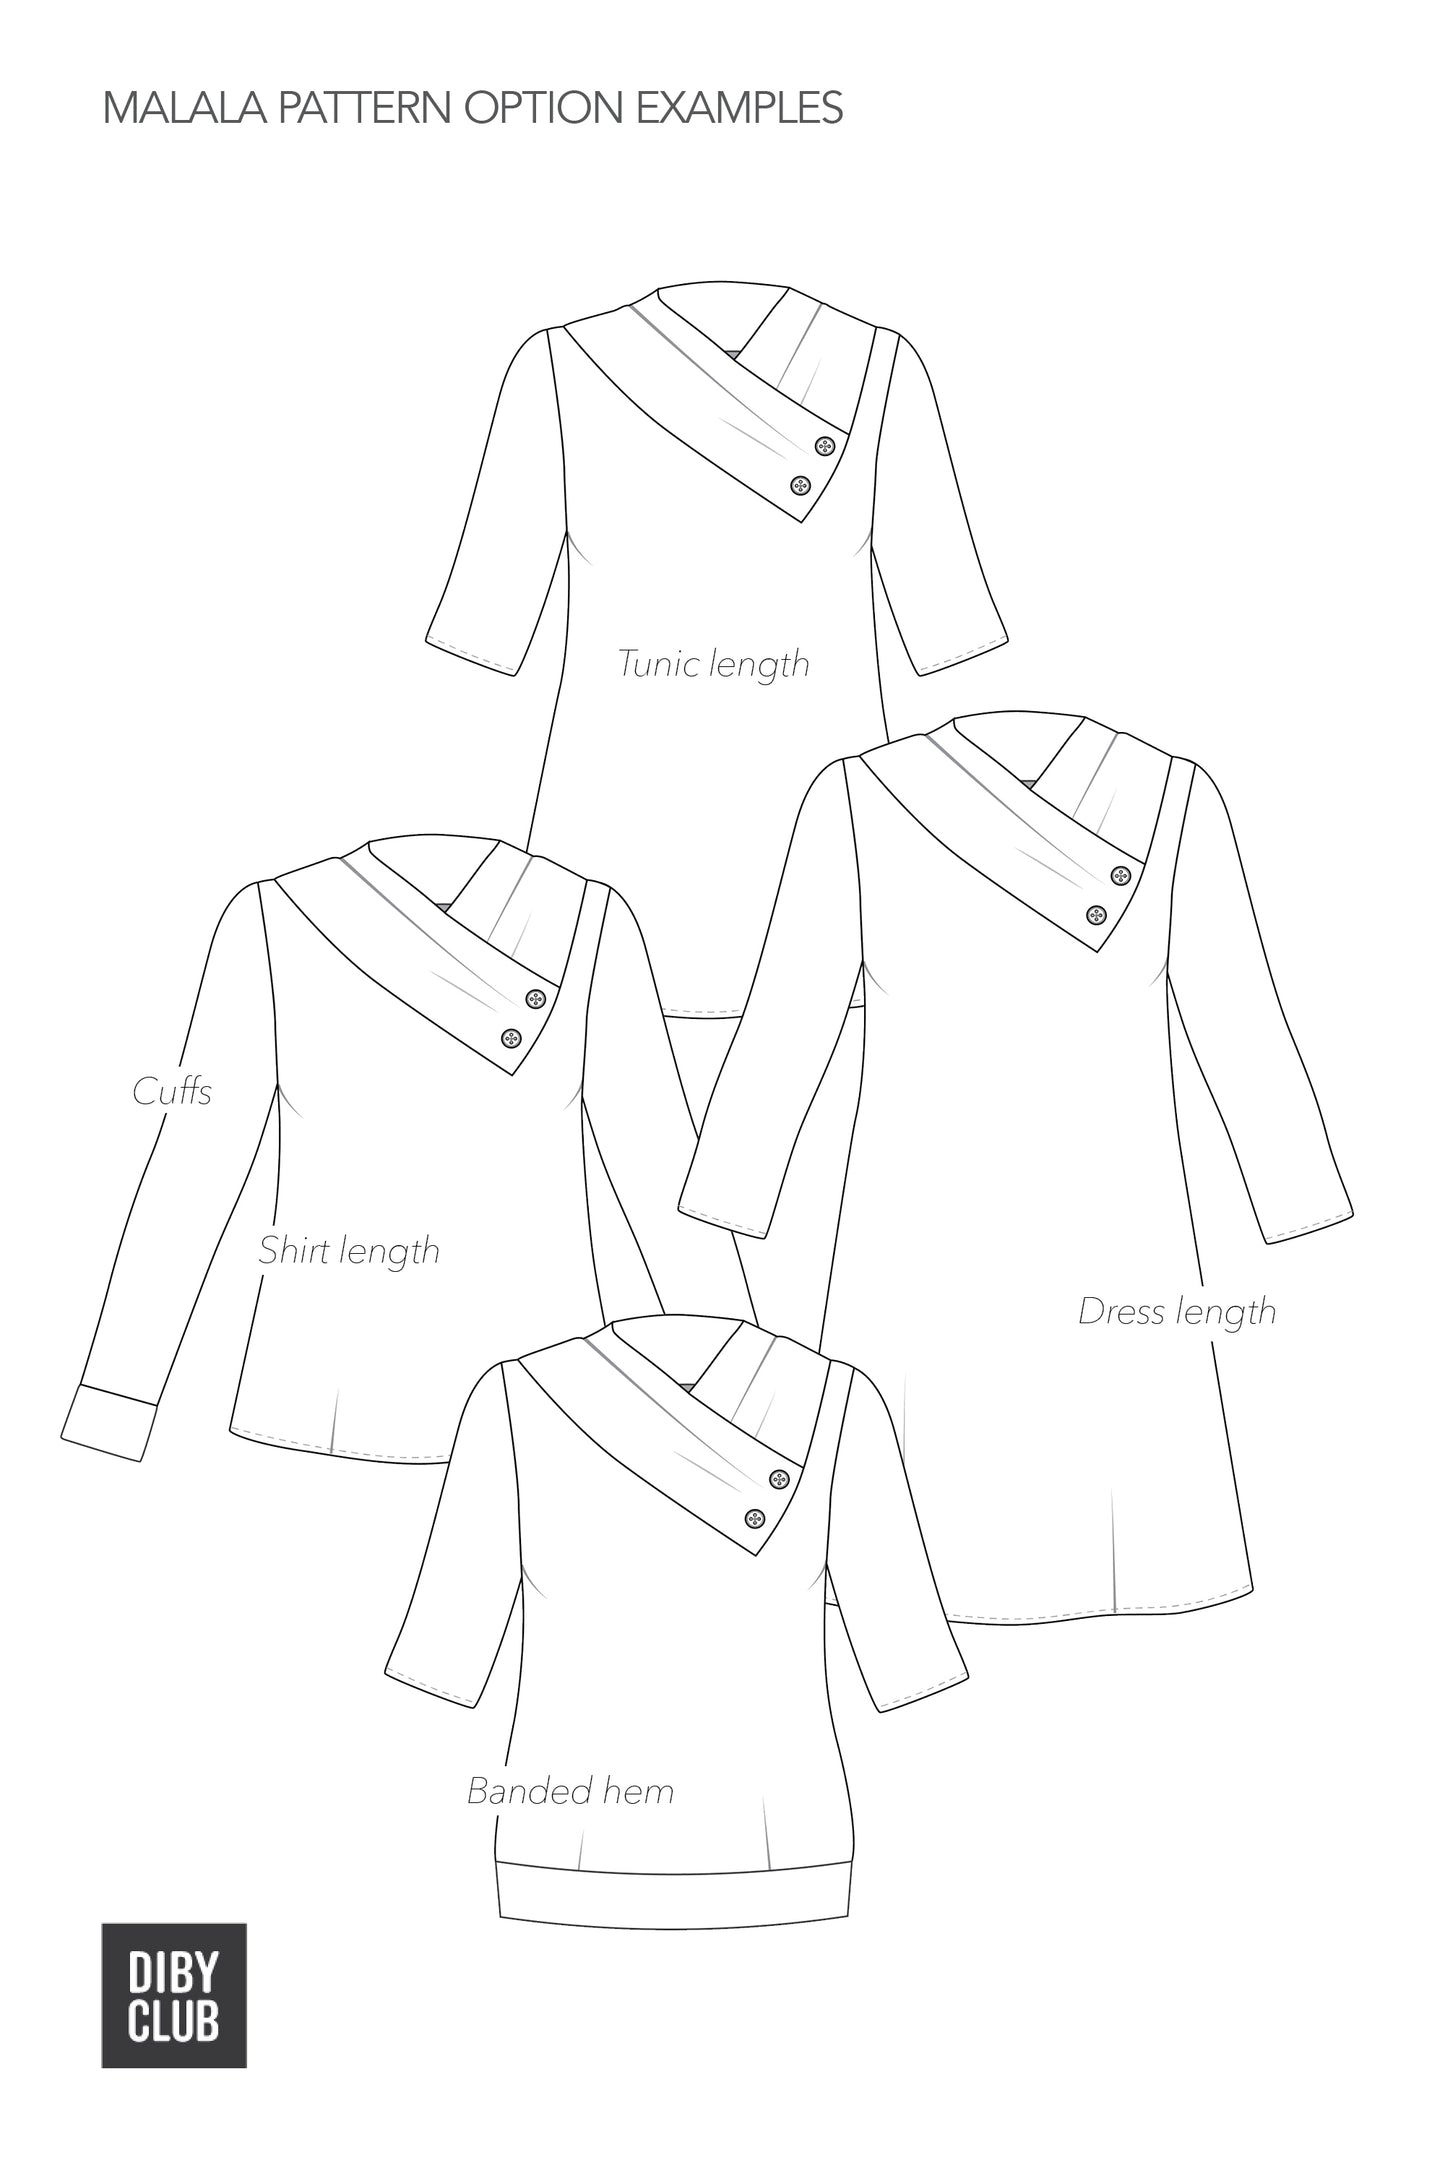 The Malala Pattern Option Examples. Tunic length, shirt length, dress length, and banded hem. 